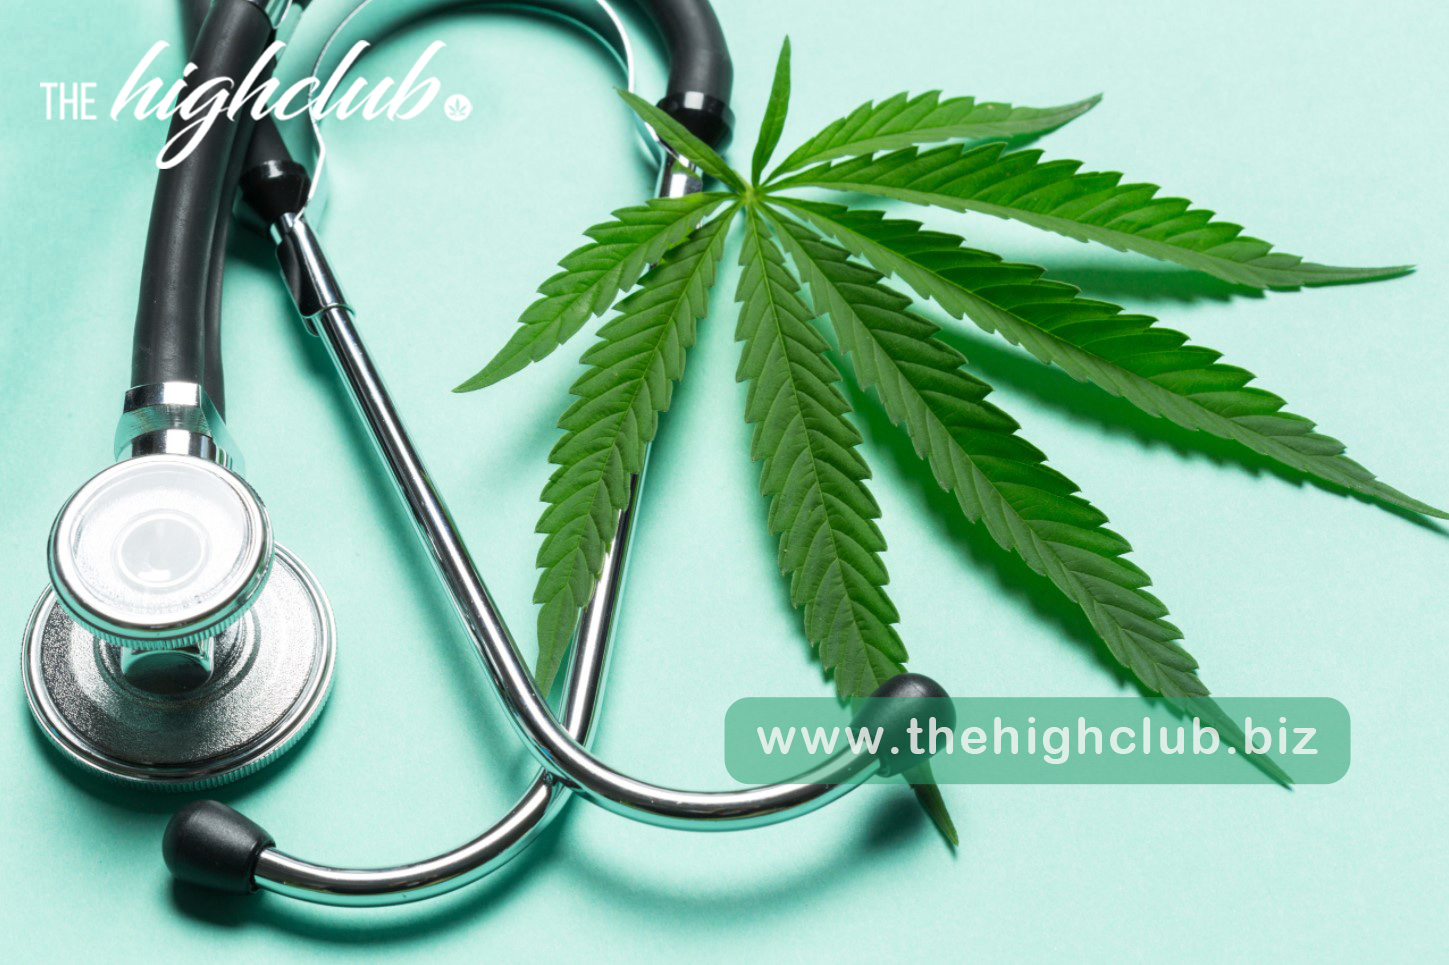 Medical marijuana